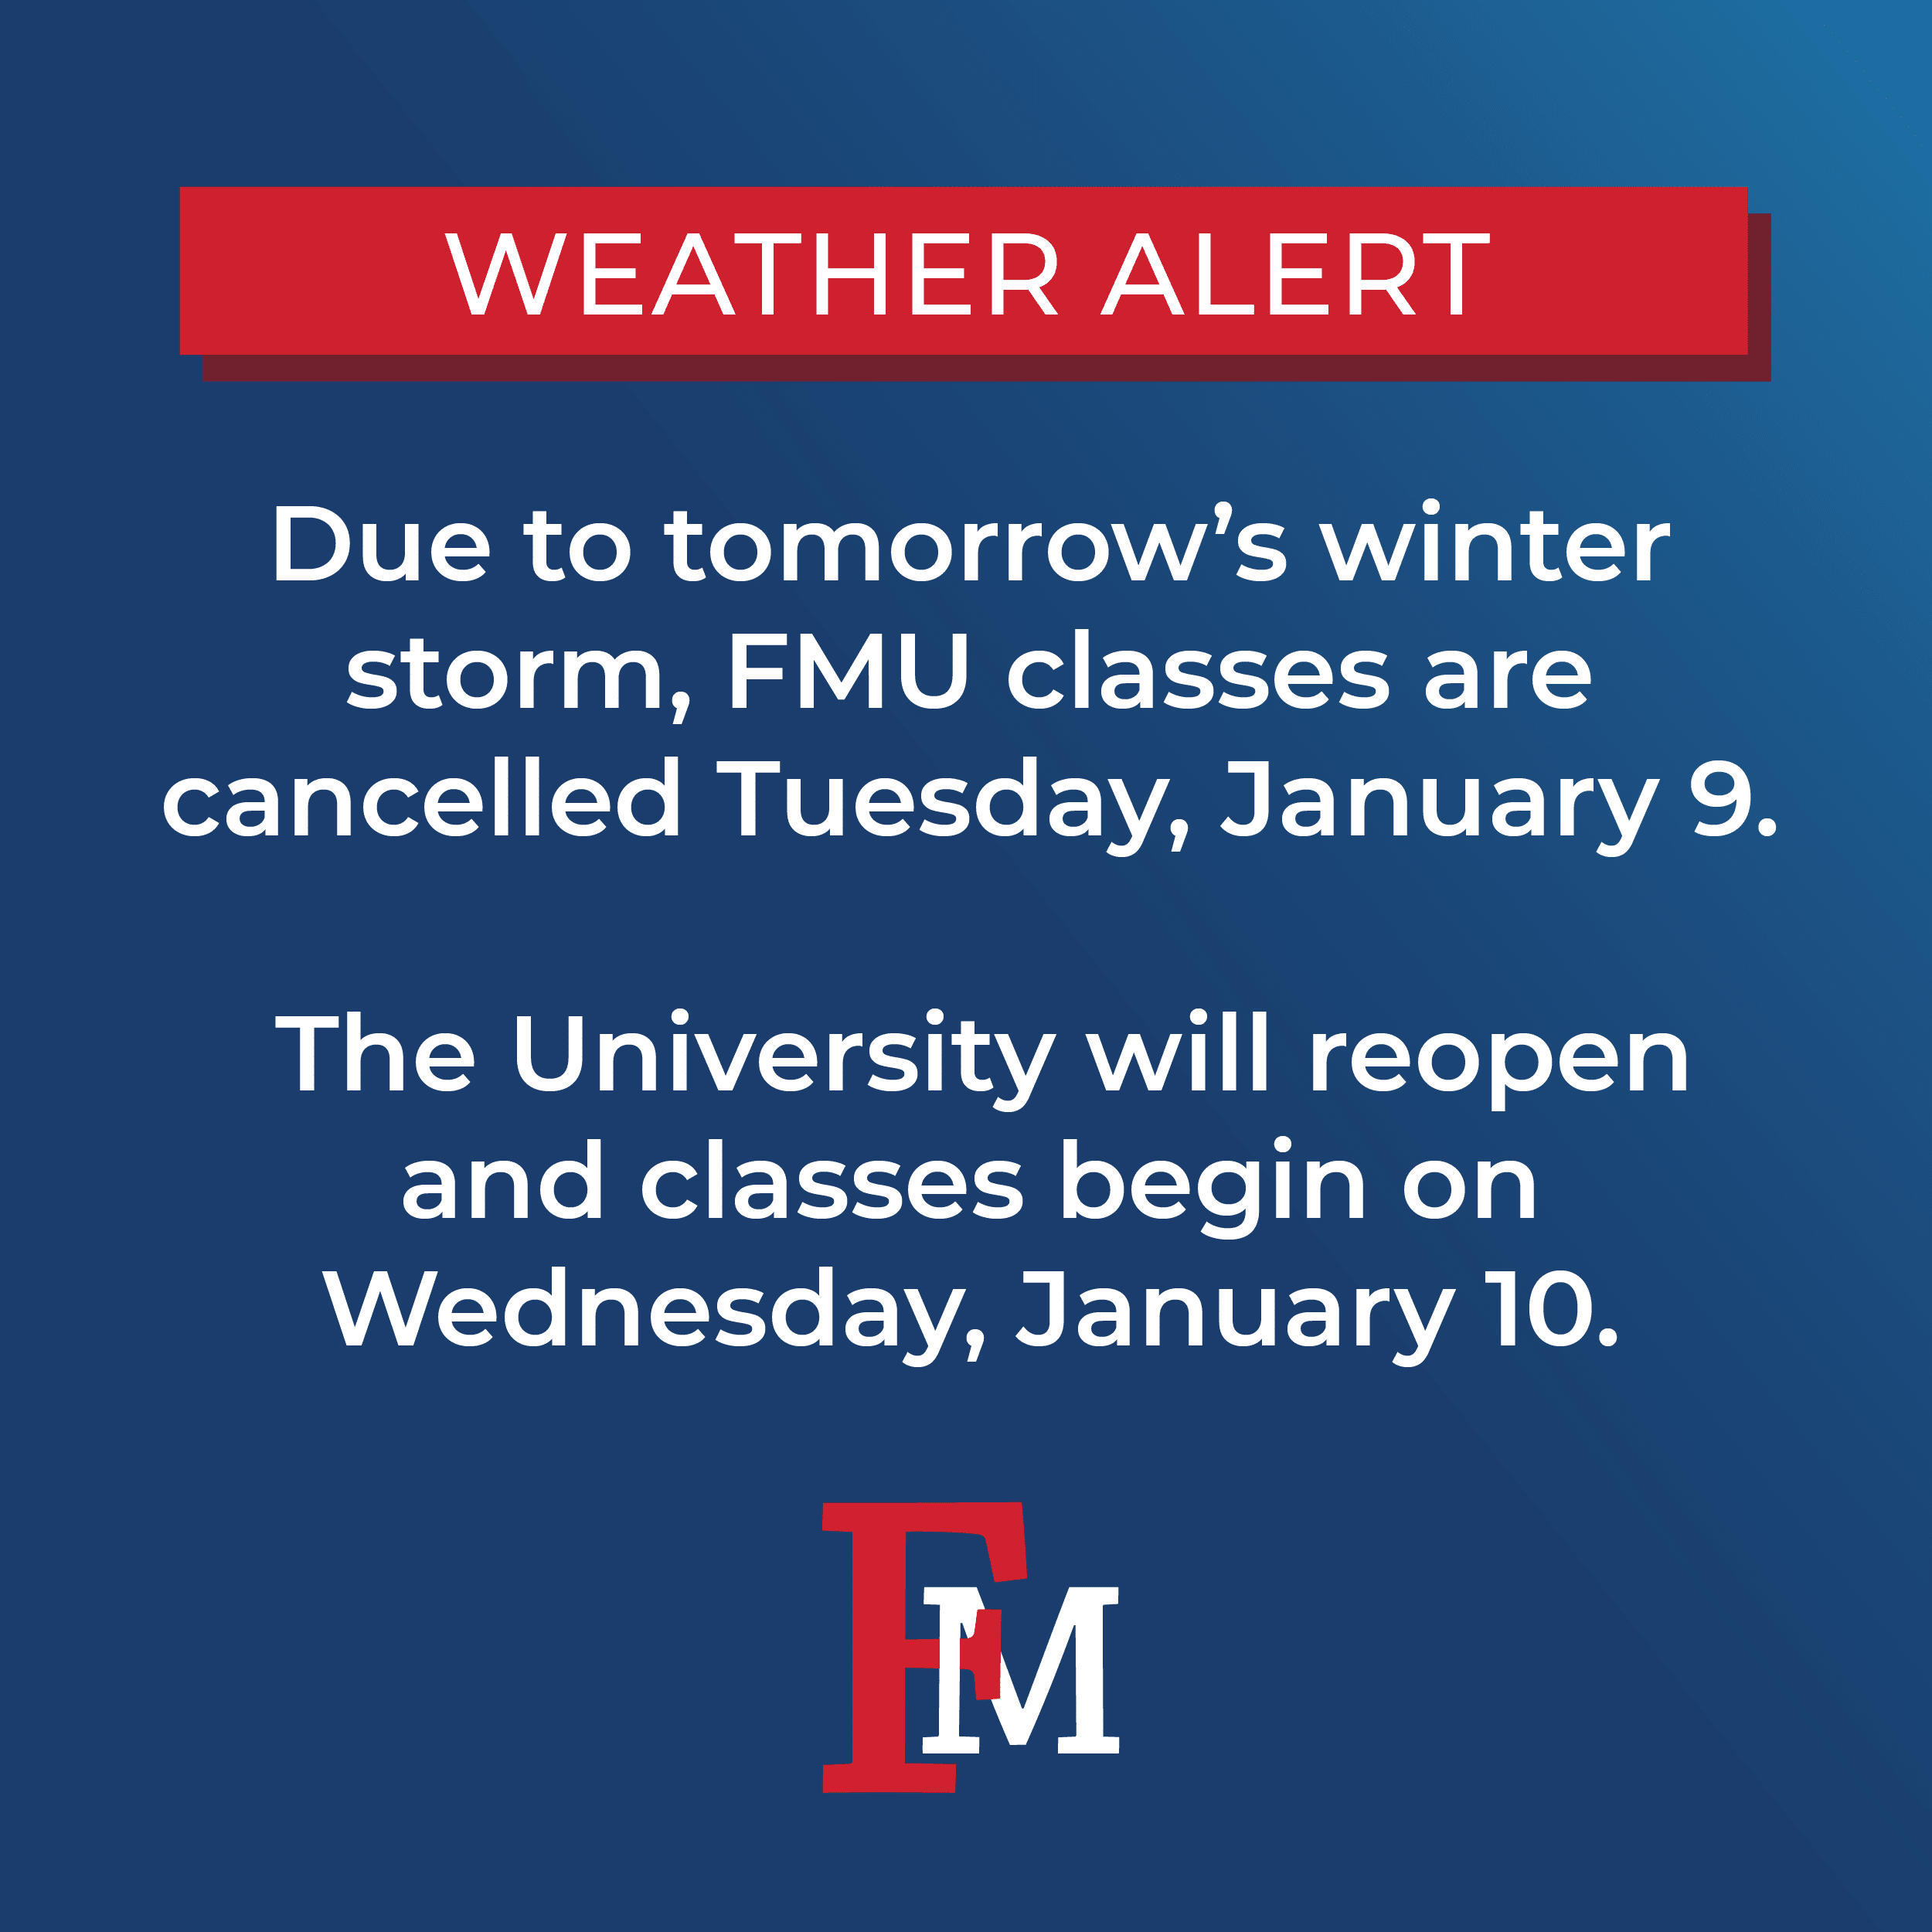 FMU Classes Cancelled Tomorrow